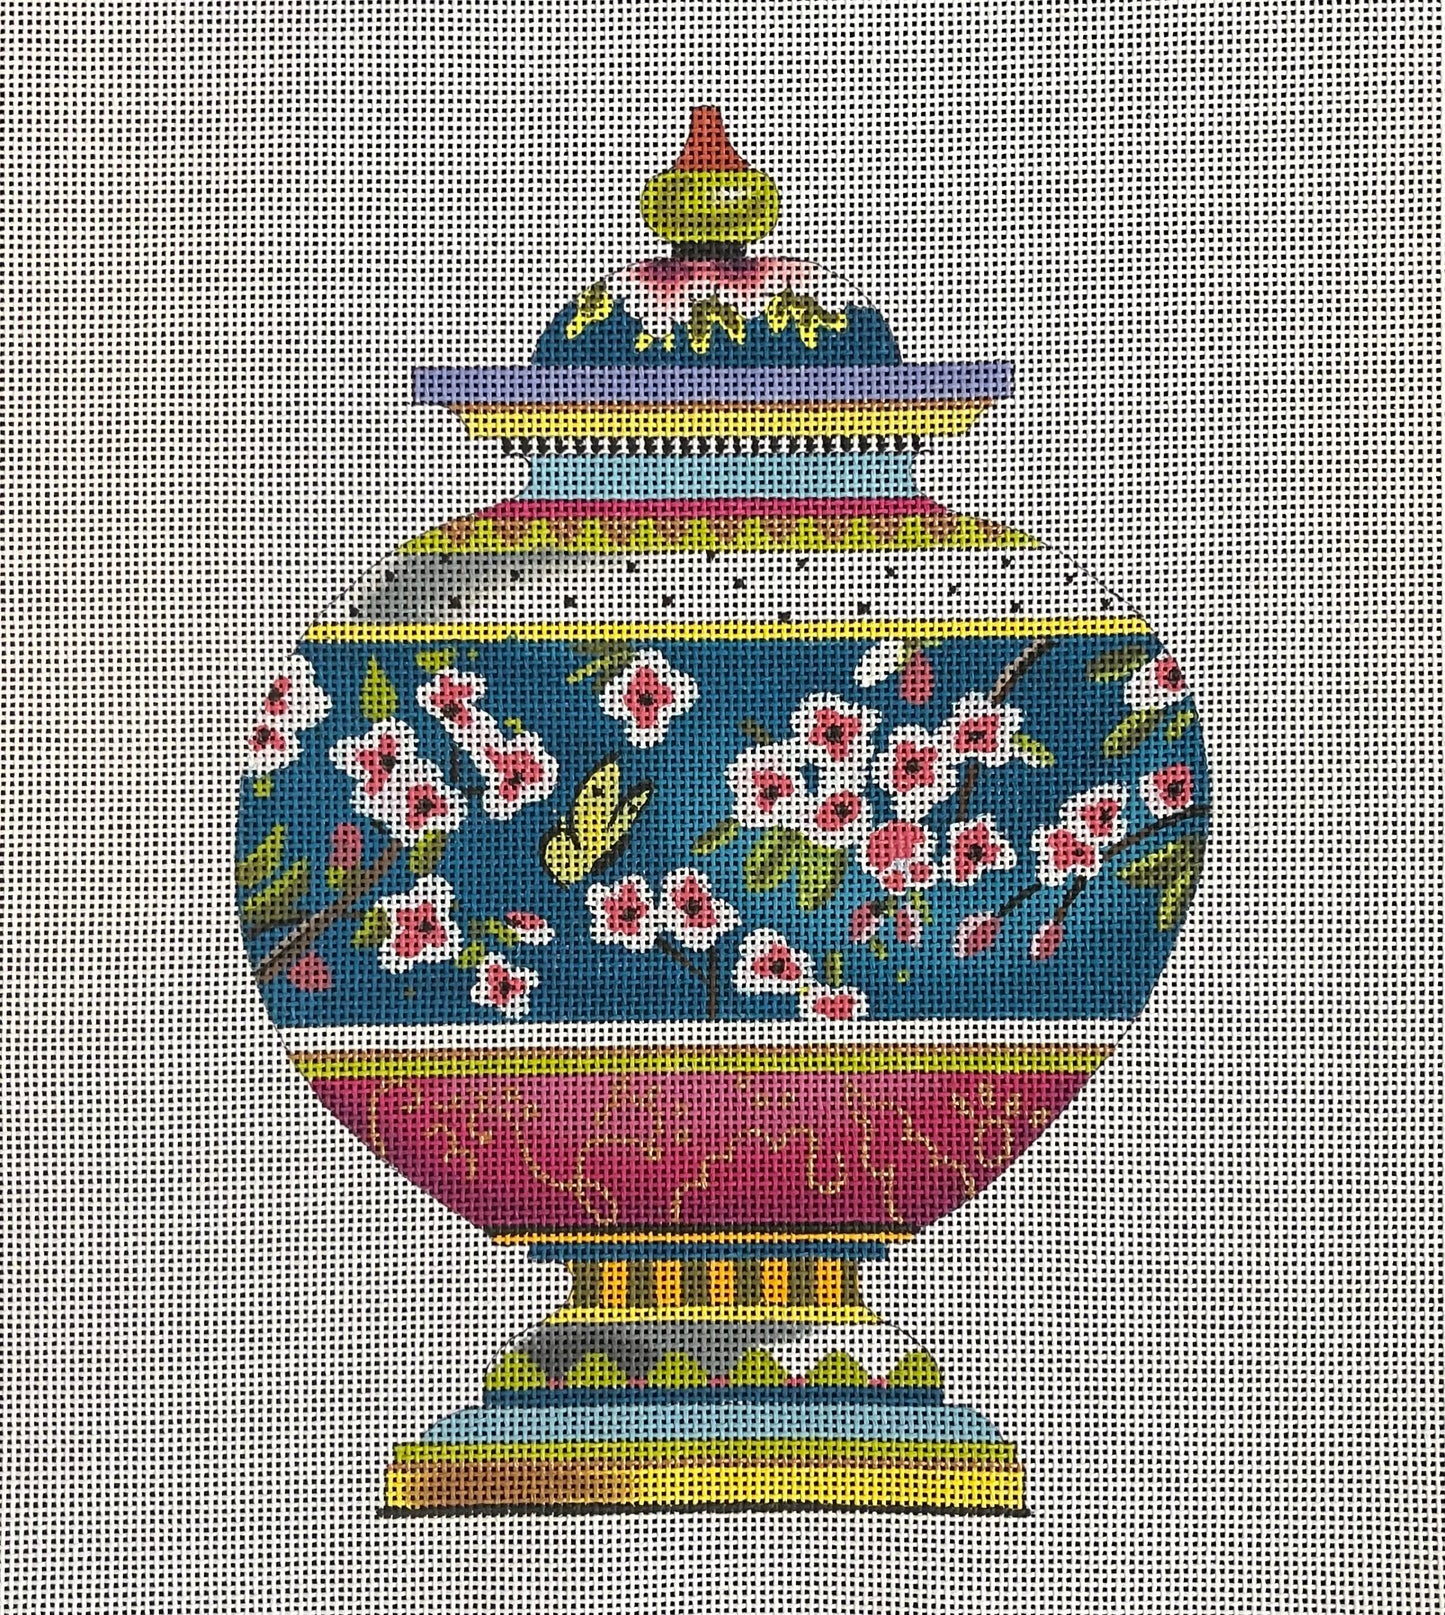 Japanese Cherry Blossom Vase